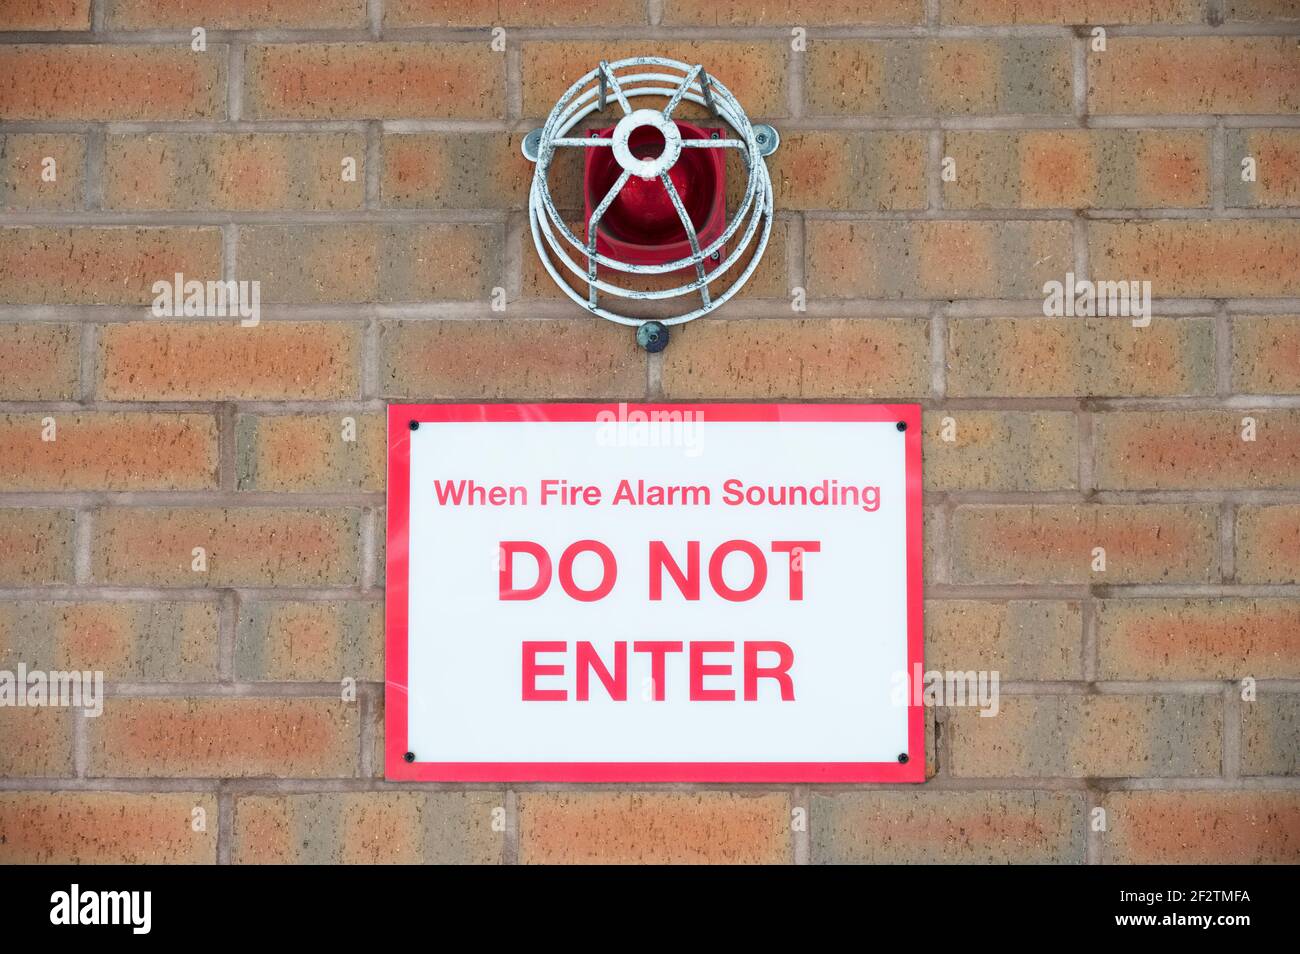 Feueralarm rote Beacon nicht betreten Schild Stockfotografie - Alamy